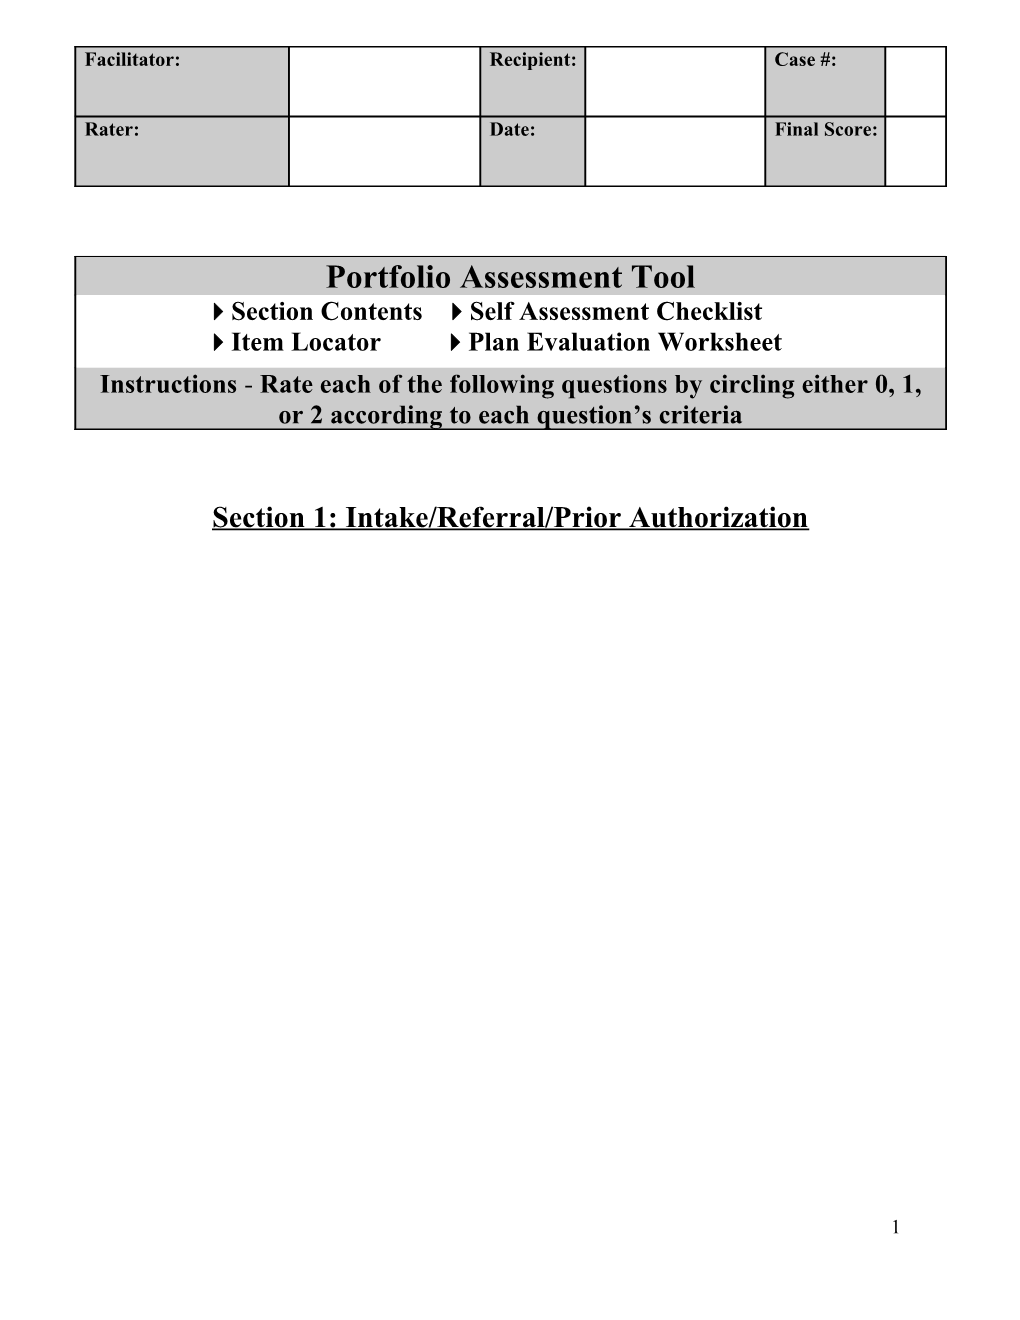 Portfolio Assessment Tool: Locator Worksheet and Self Assessment Checklist